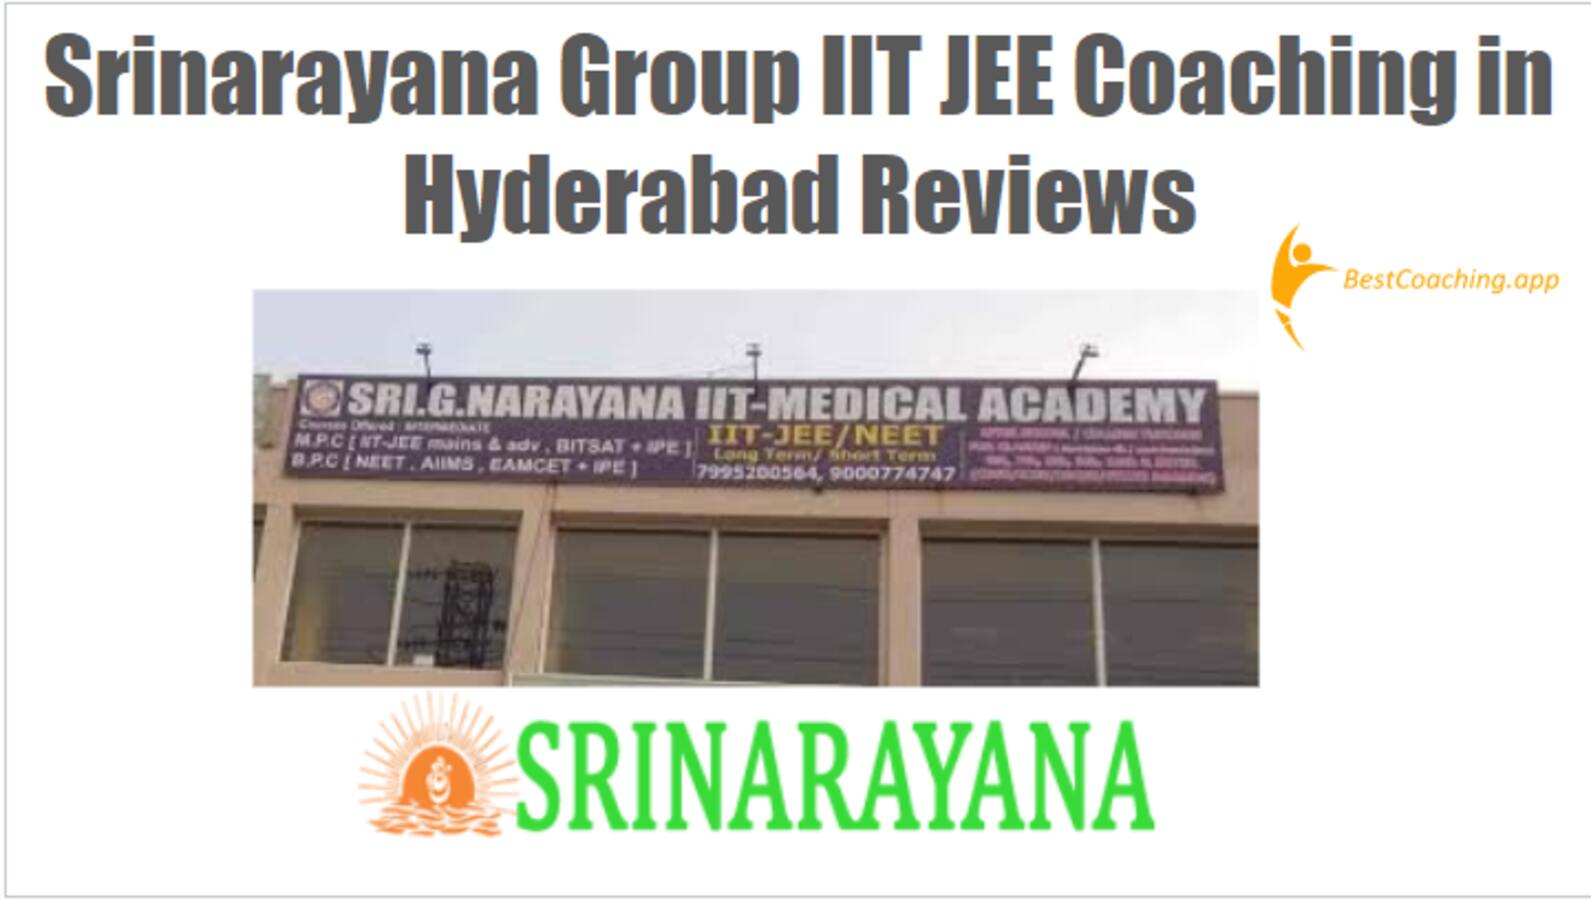 Srinarayana Group IIT JEE Coaching in Hyderabad